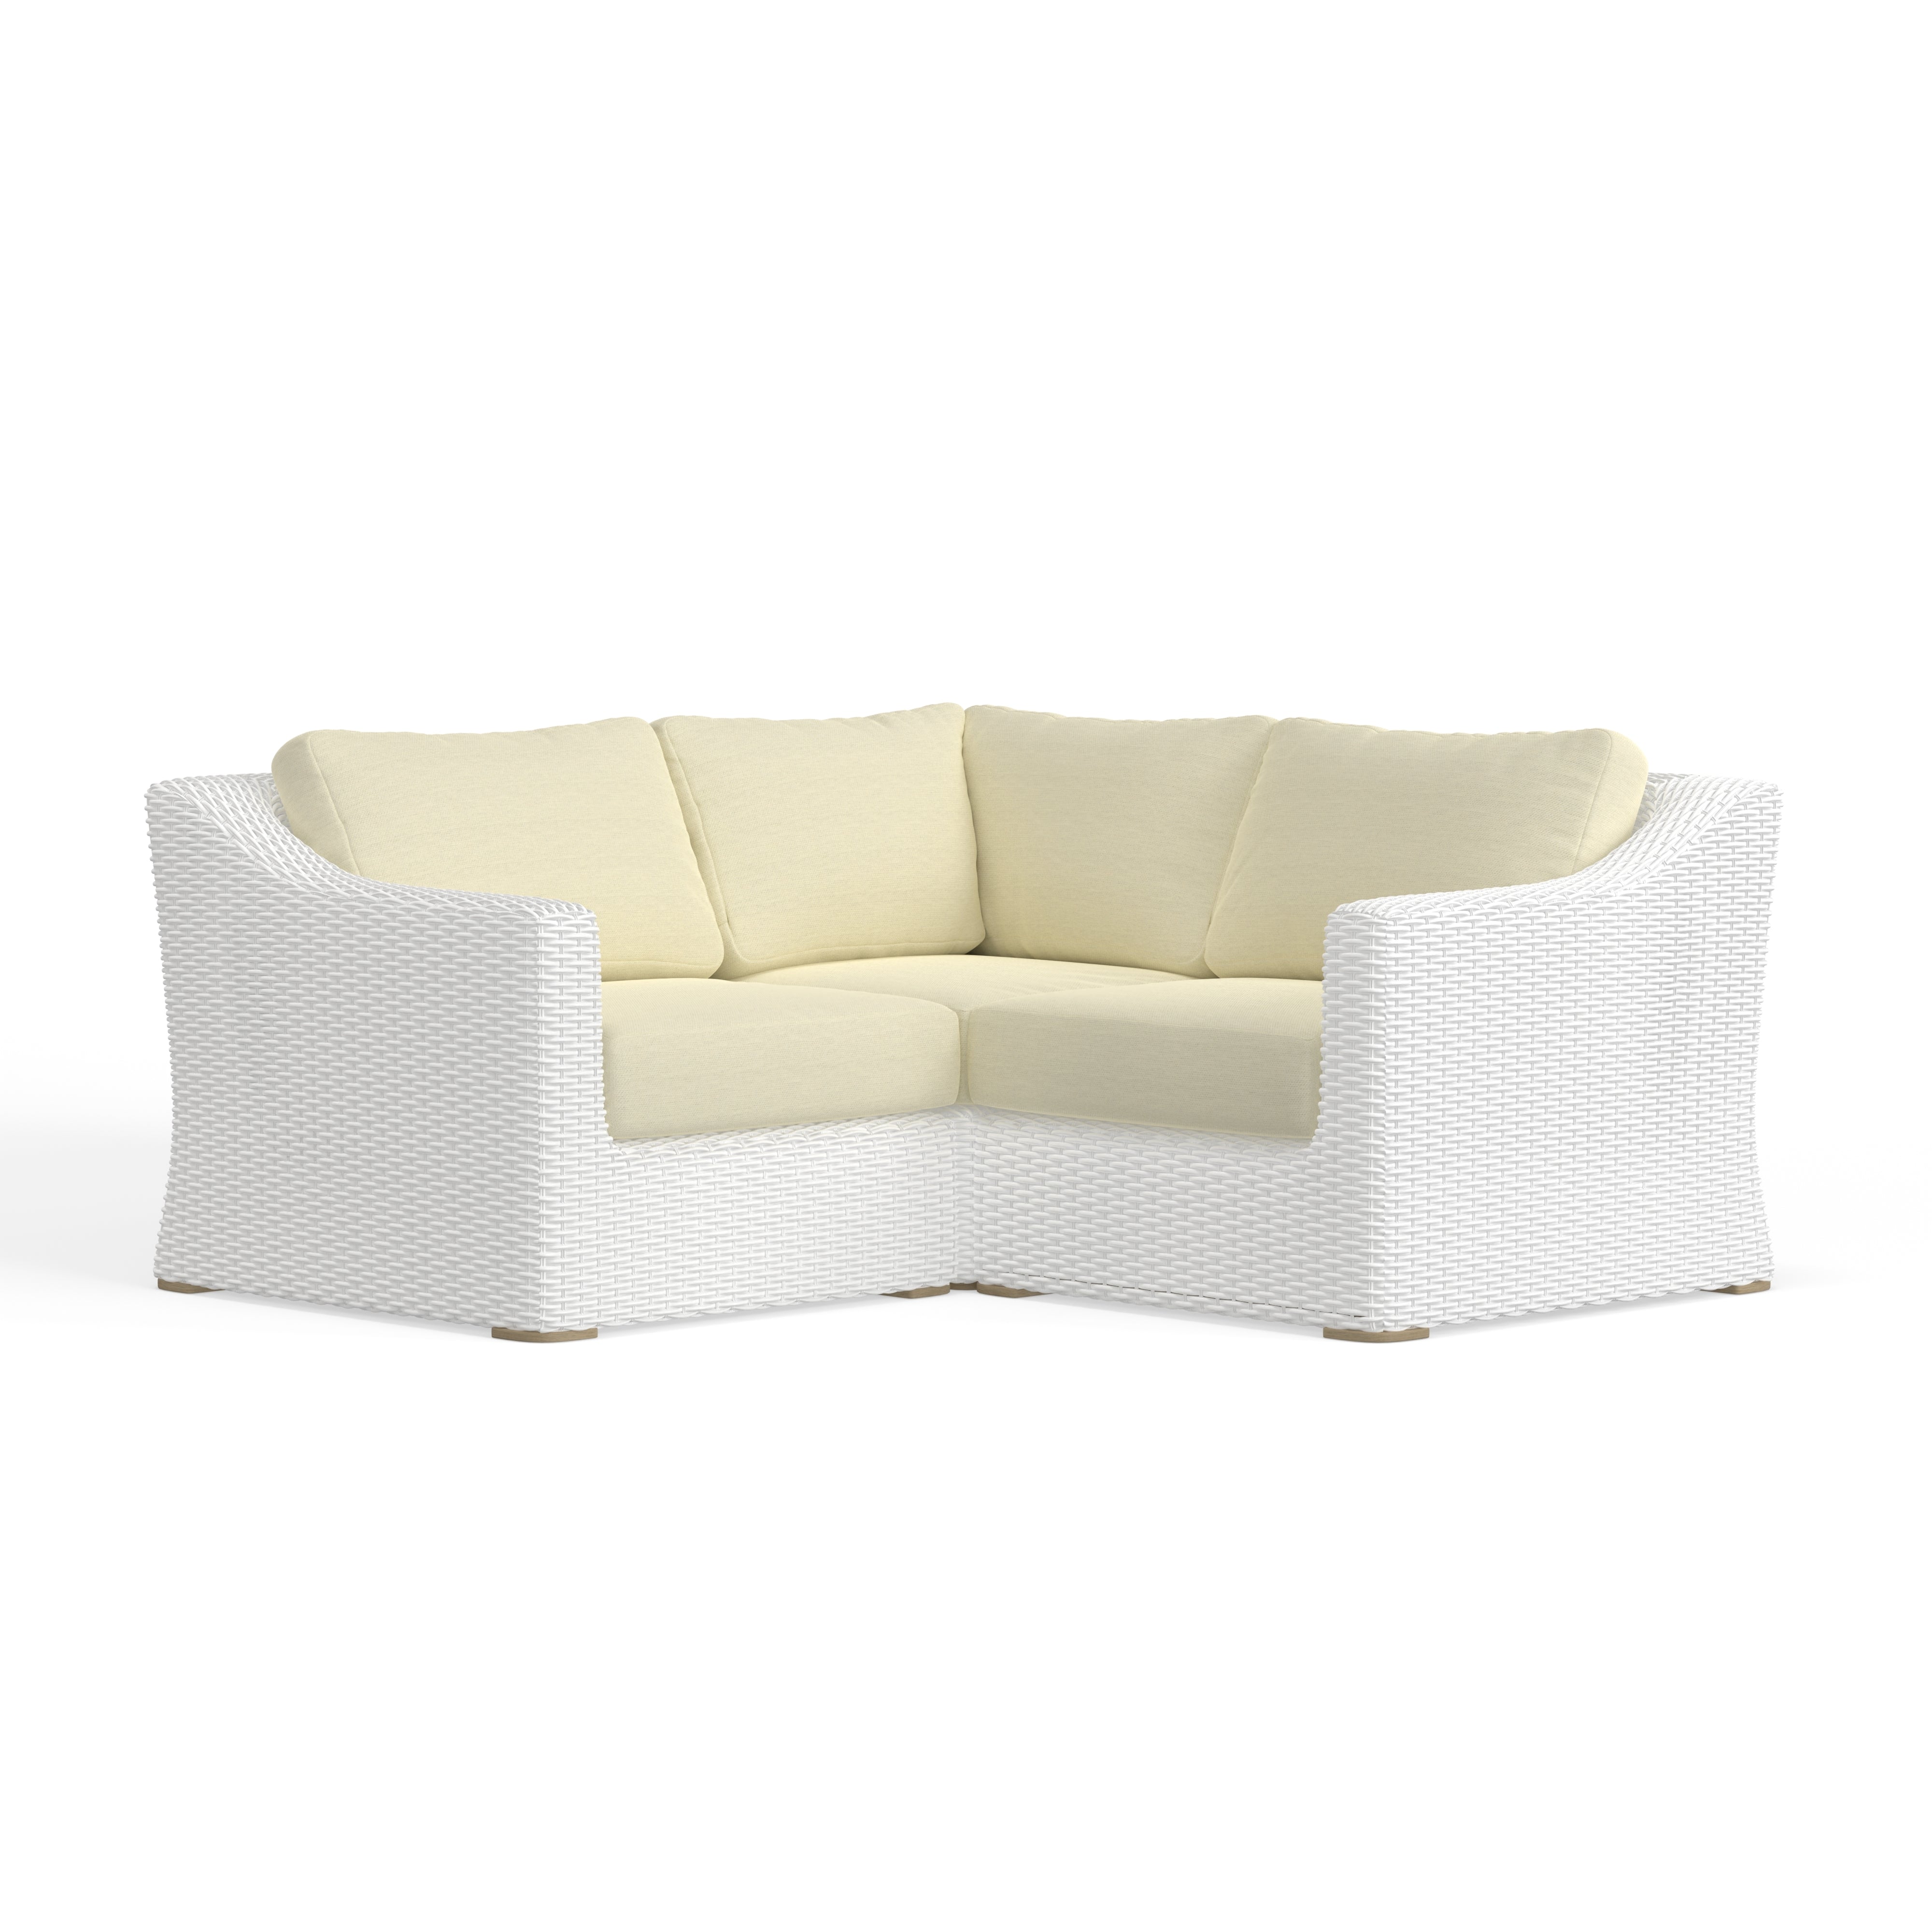 White Wicker Modular Sofa